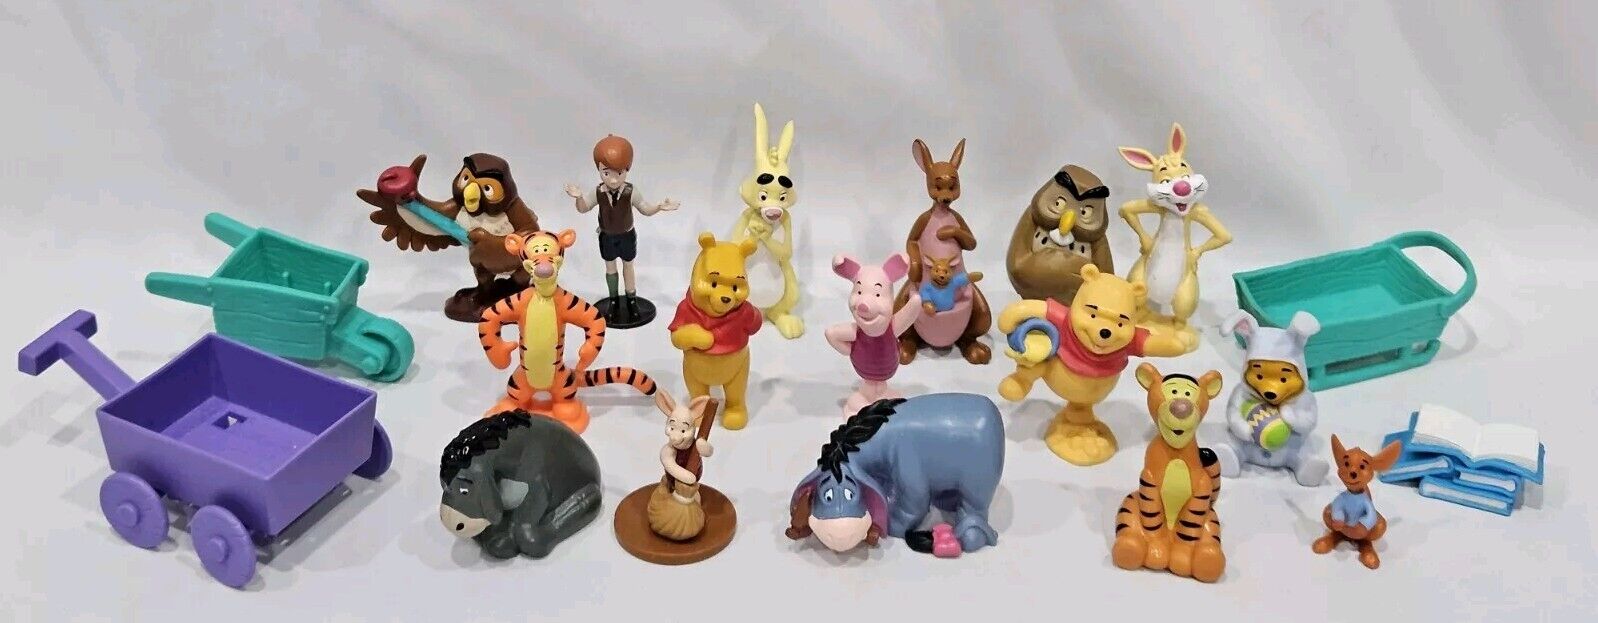 Disney Store Winnie the Pooh PVC Figure Playset 